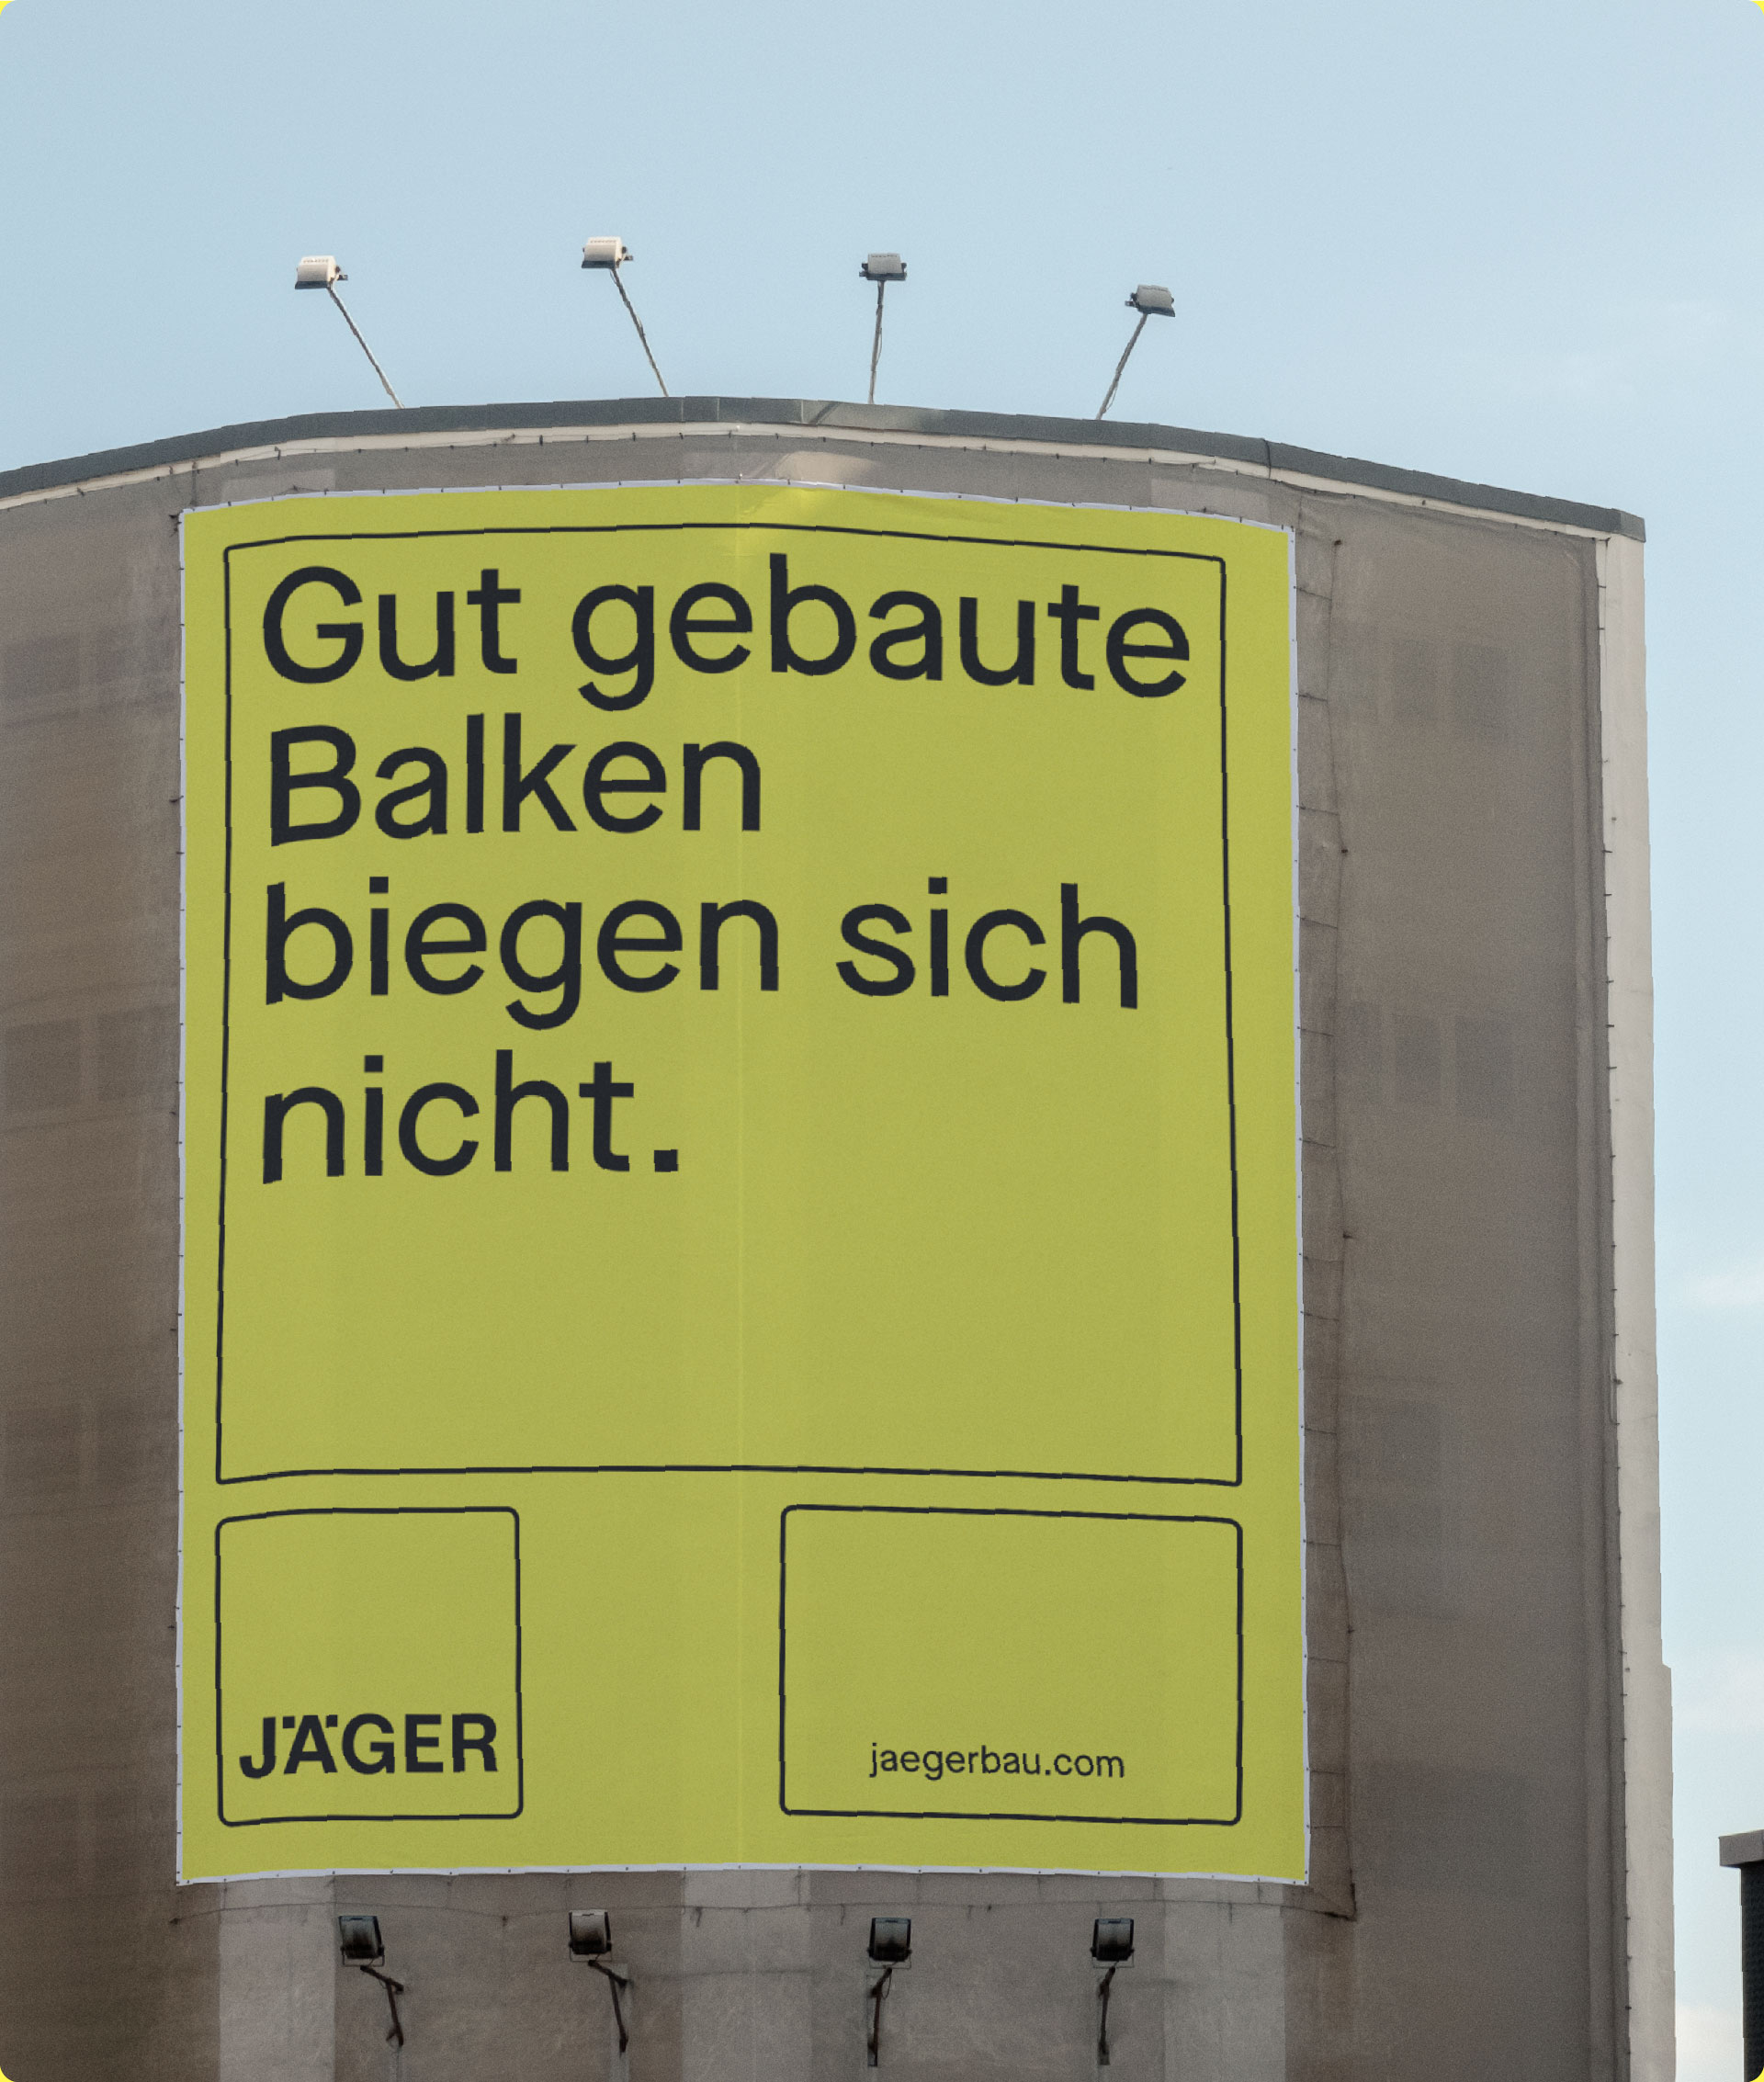 Jäger Bau - Corporate Wording